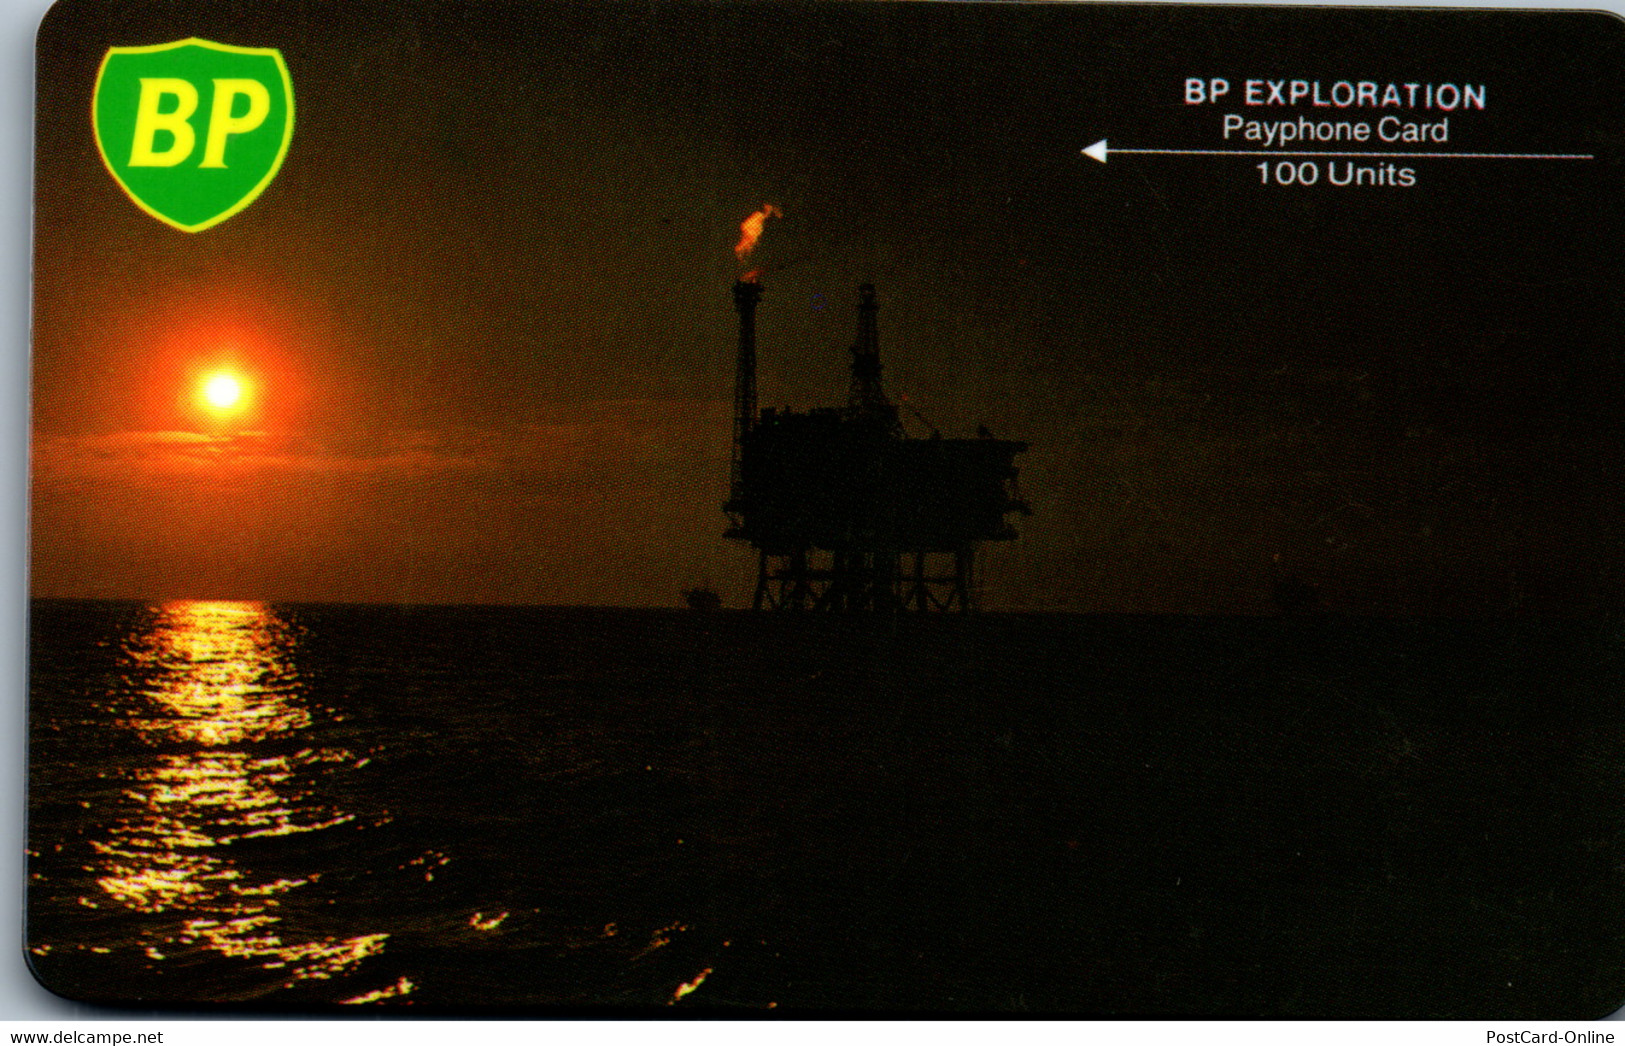 32007 - Großbritannien - BP Exploration Payphone Card - [ 2] Plataformas Petroleras